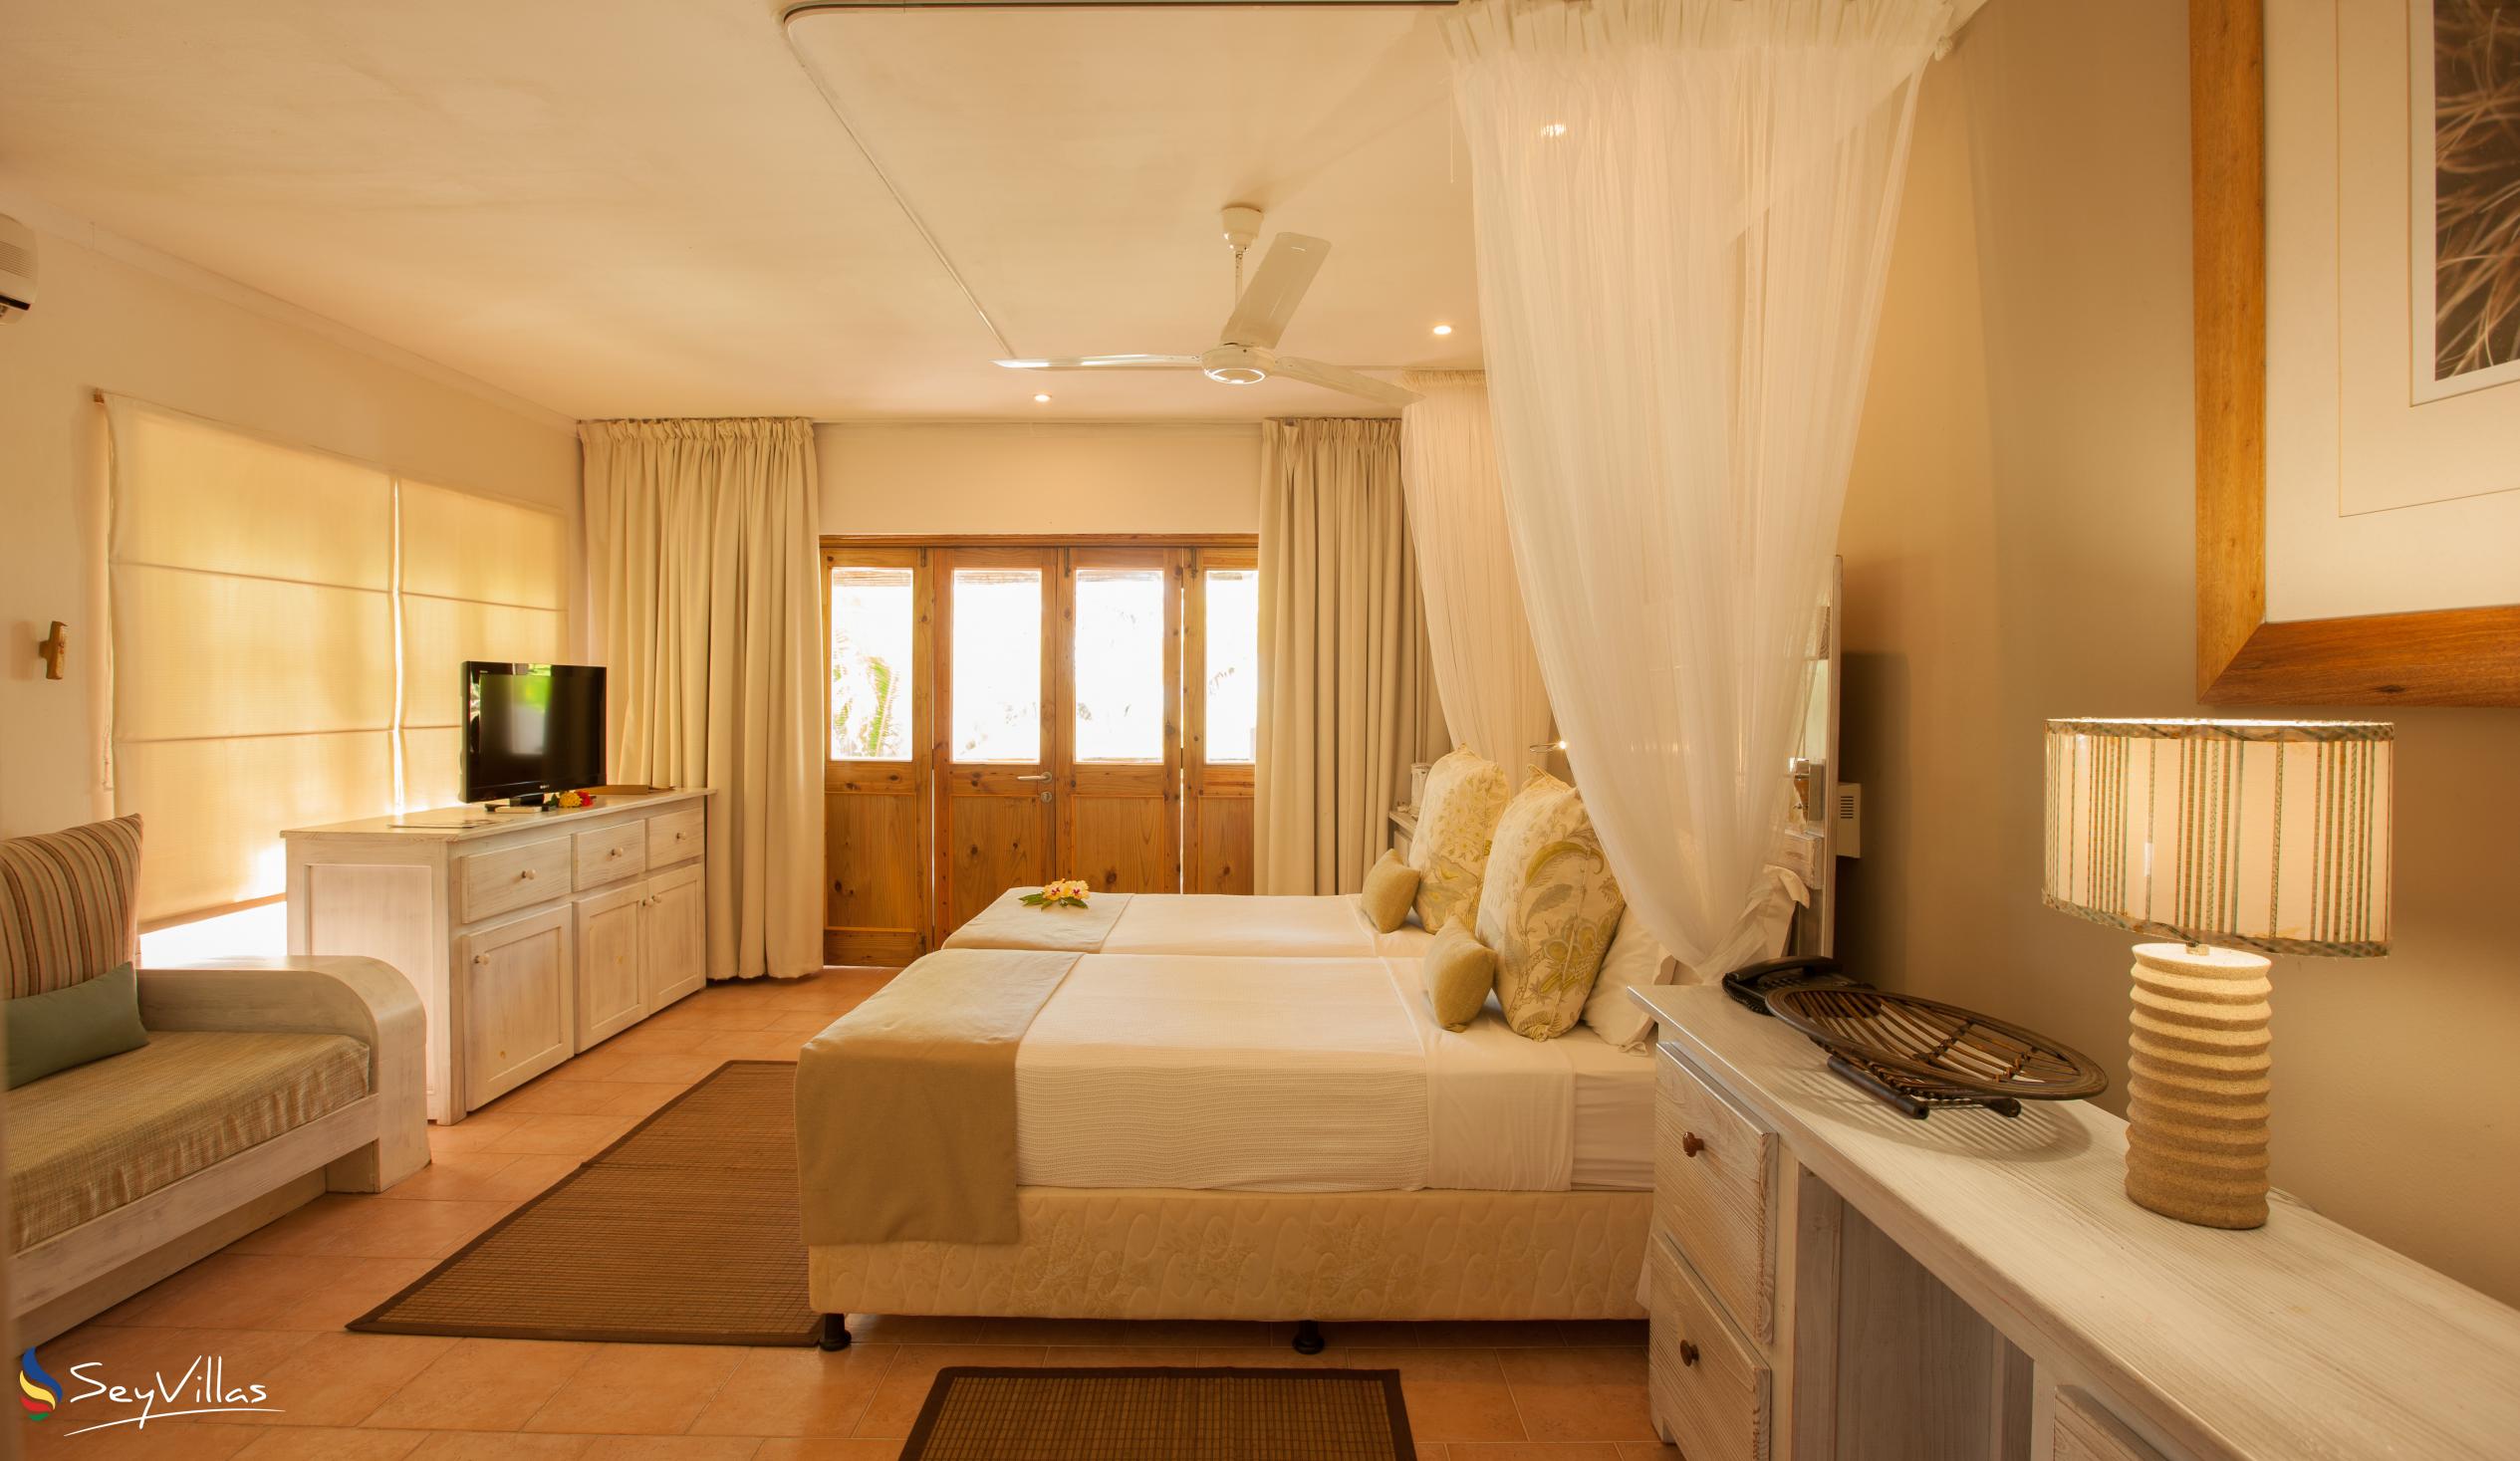 Photo 63: Indian Ocean Lodge - Double Room - Praslin (Seychelles)